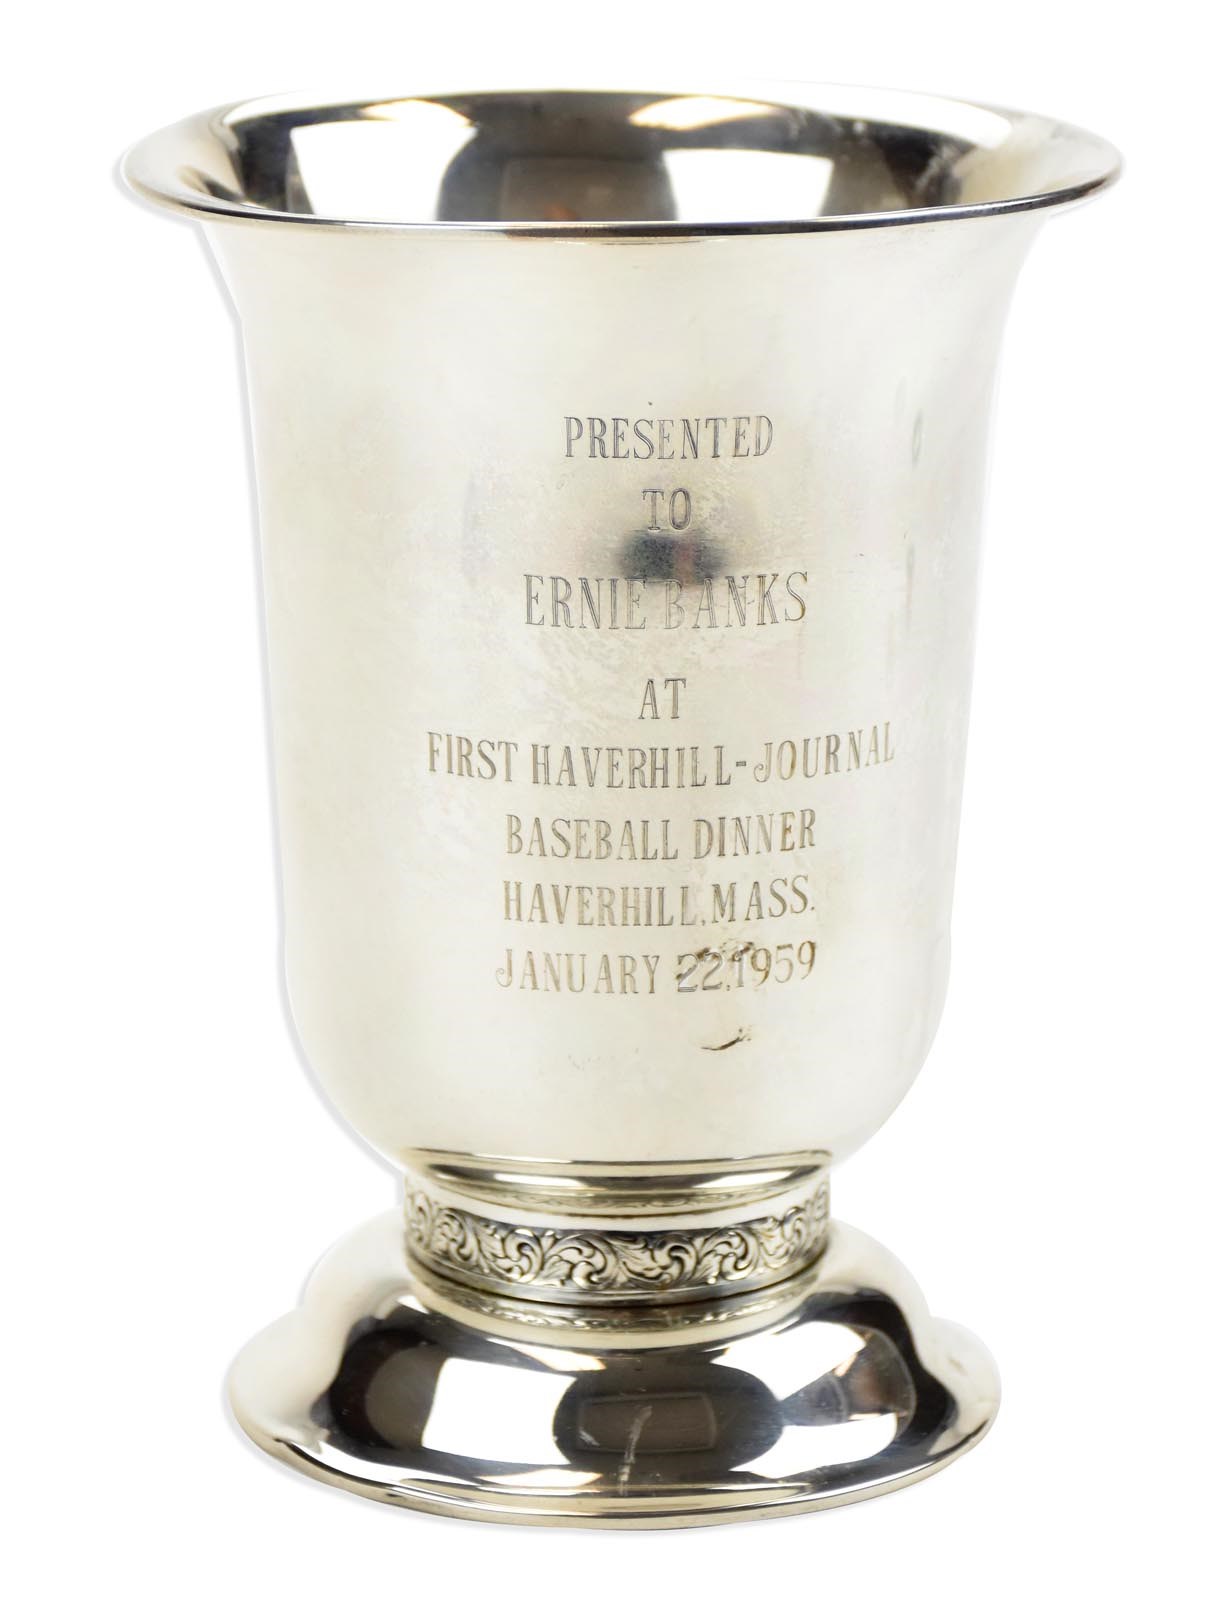 Chicago Cubs & Wrigley Field - 1959 Ernie Banks Sterling Silver Presentational Trophy